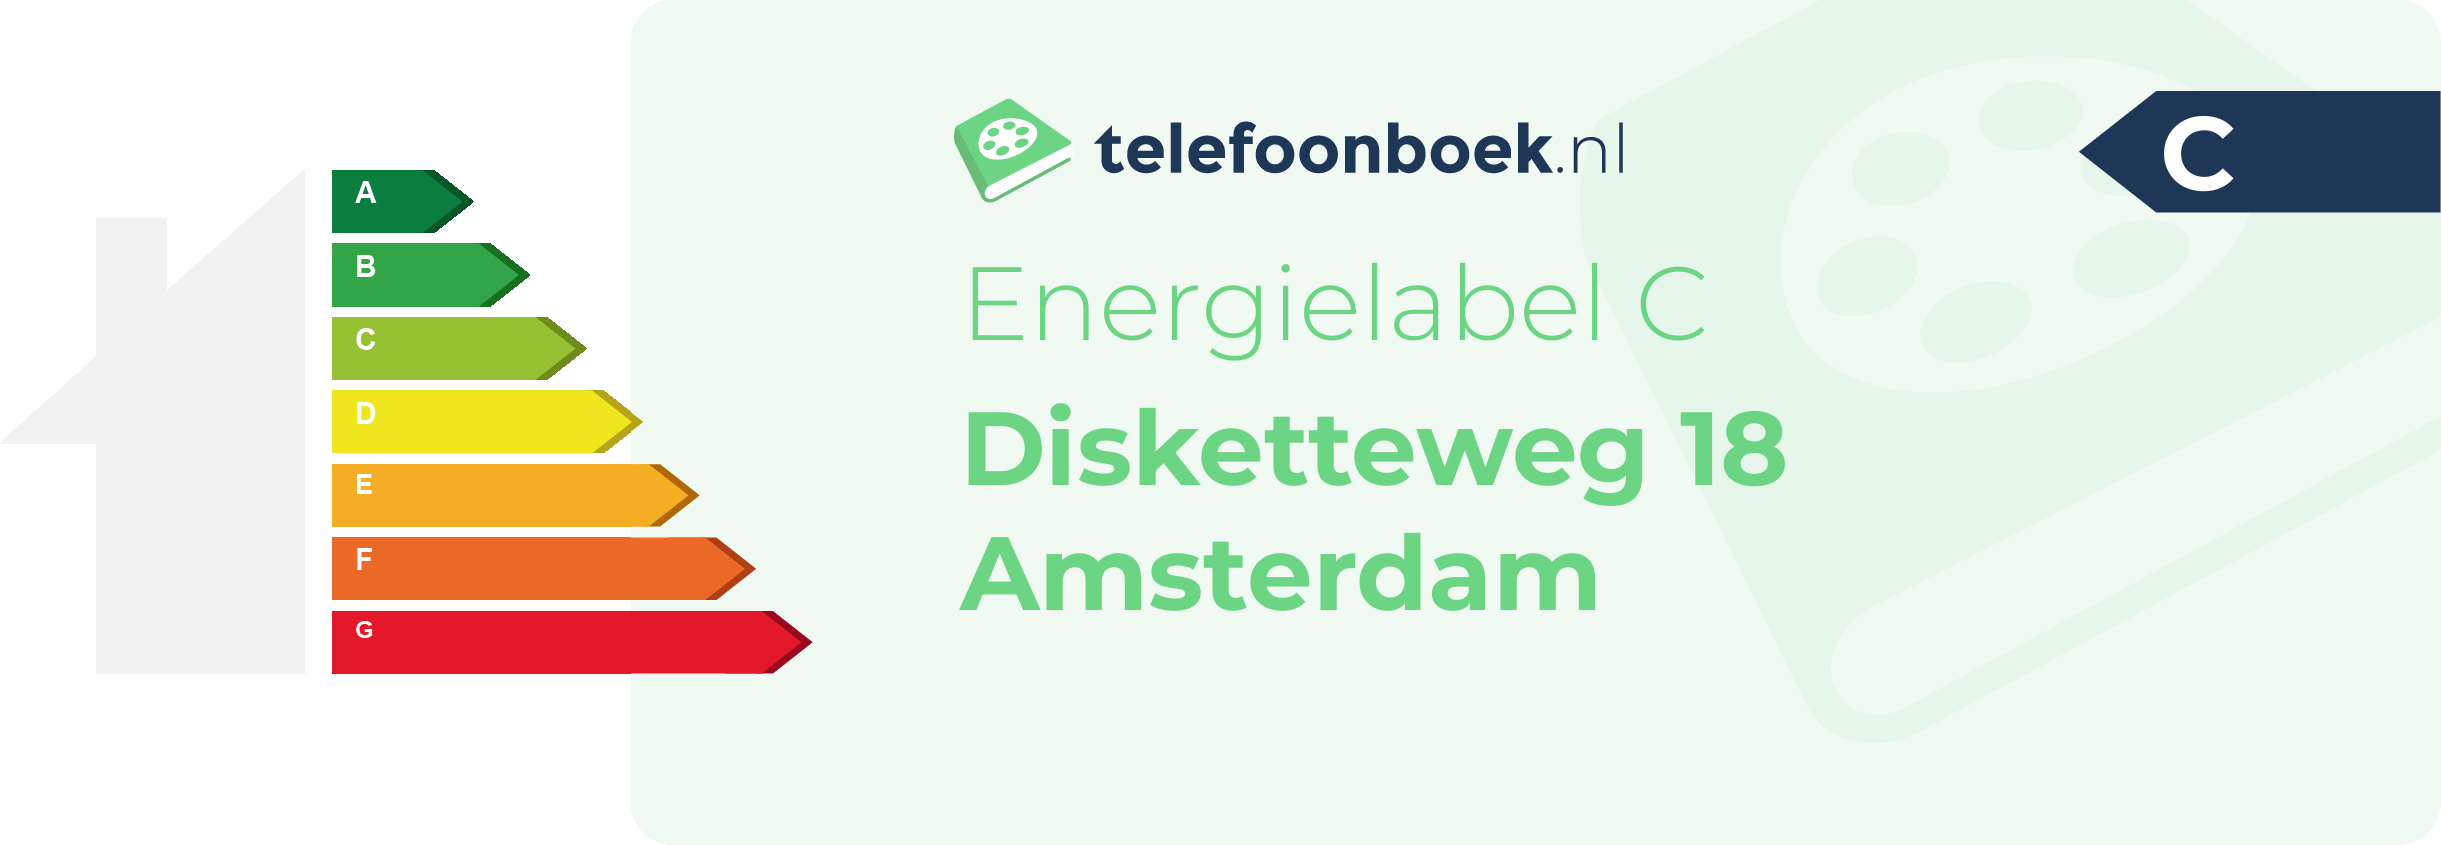 Energielabel Disketteweg 18 Amsterdam